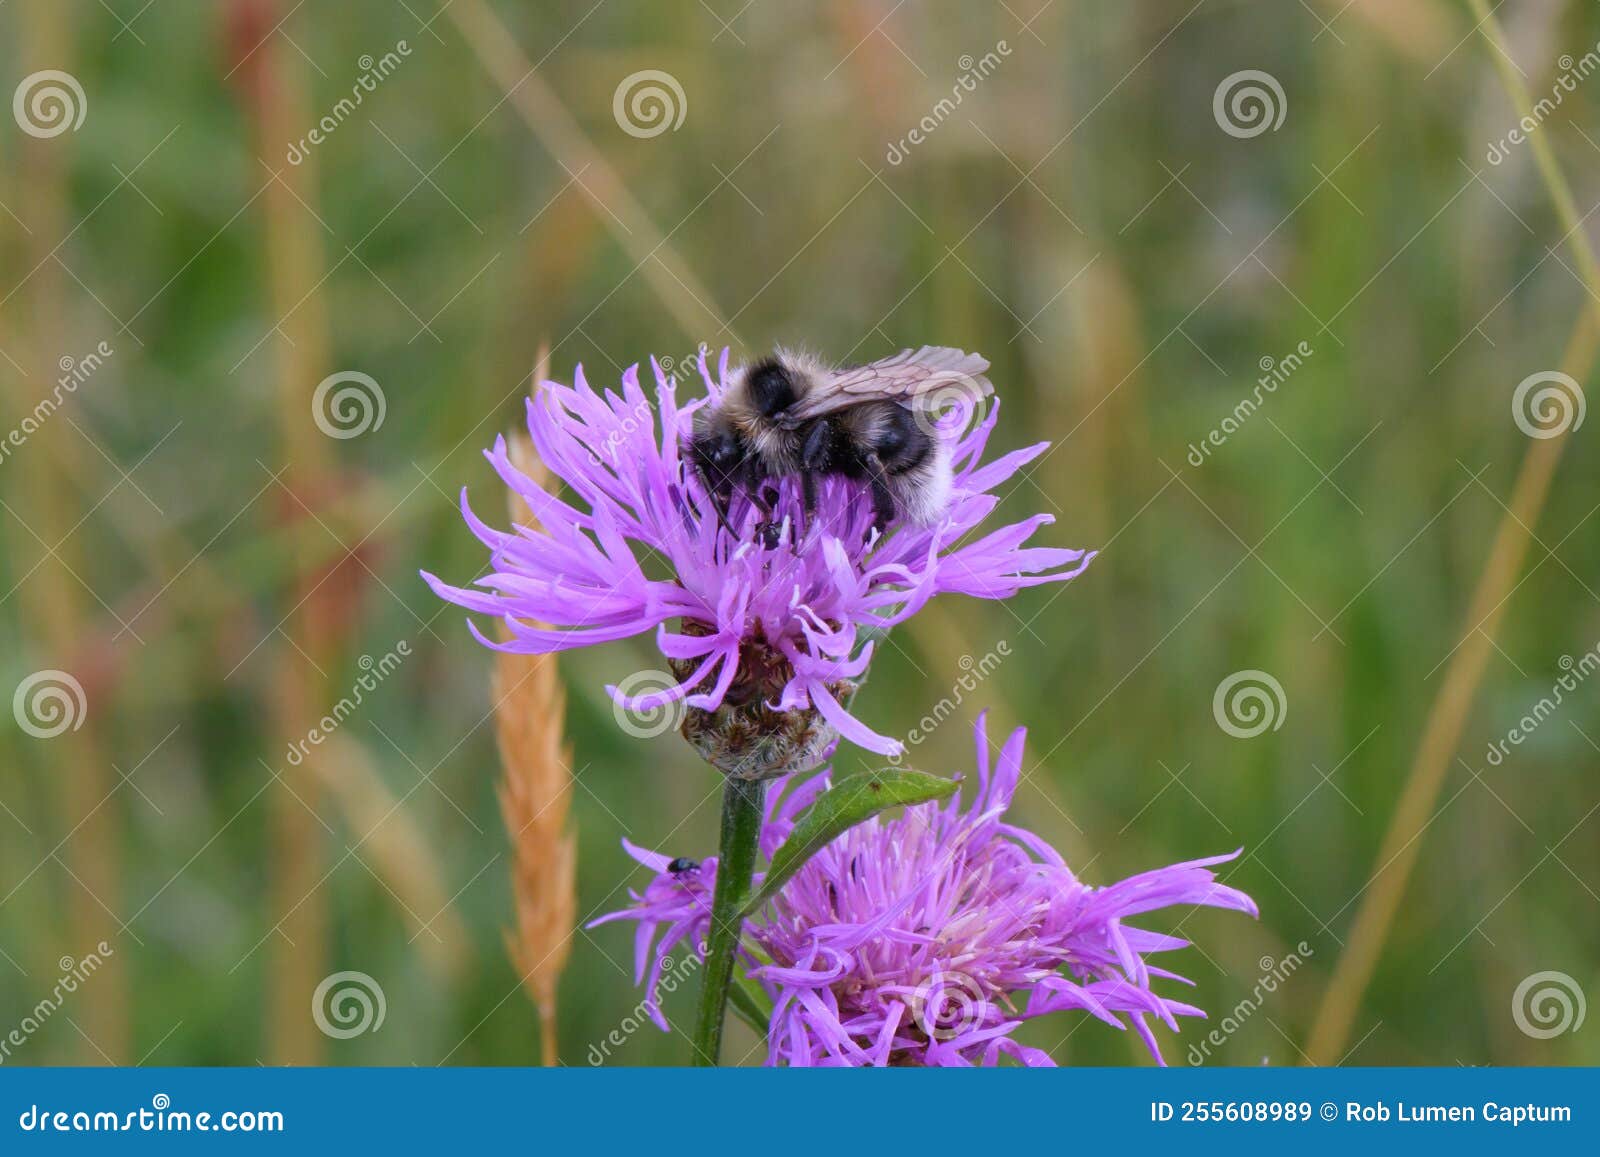 greater knapweed centaurea scabiosa purple flower with bumblebee